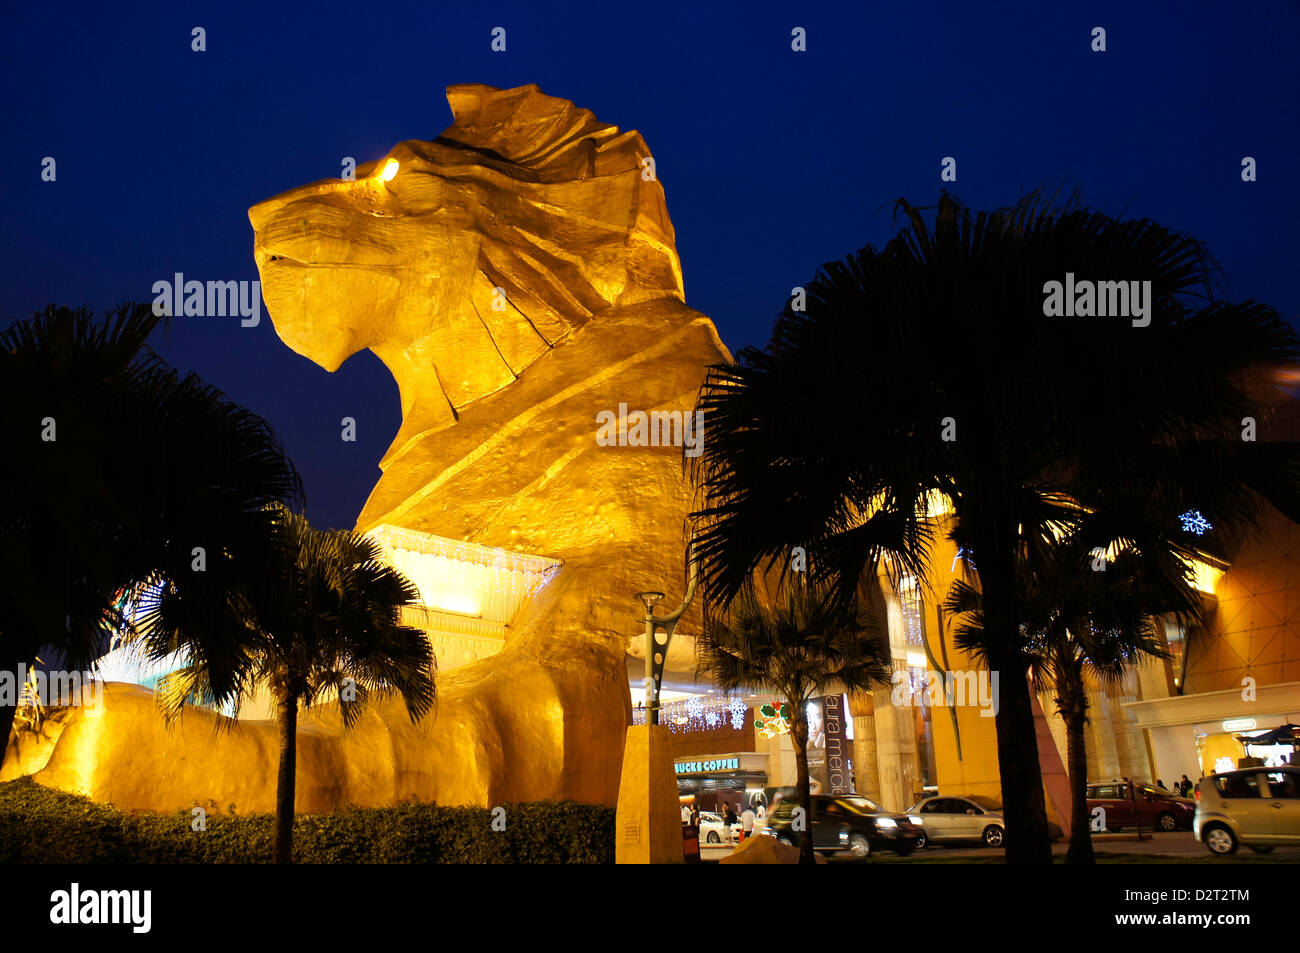 Sphinx At Sunway Pyramid Shopping Mall Malaysia Stock Photo